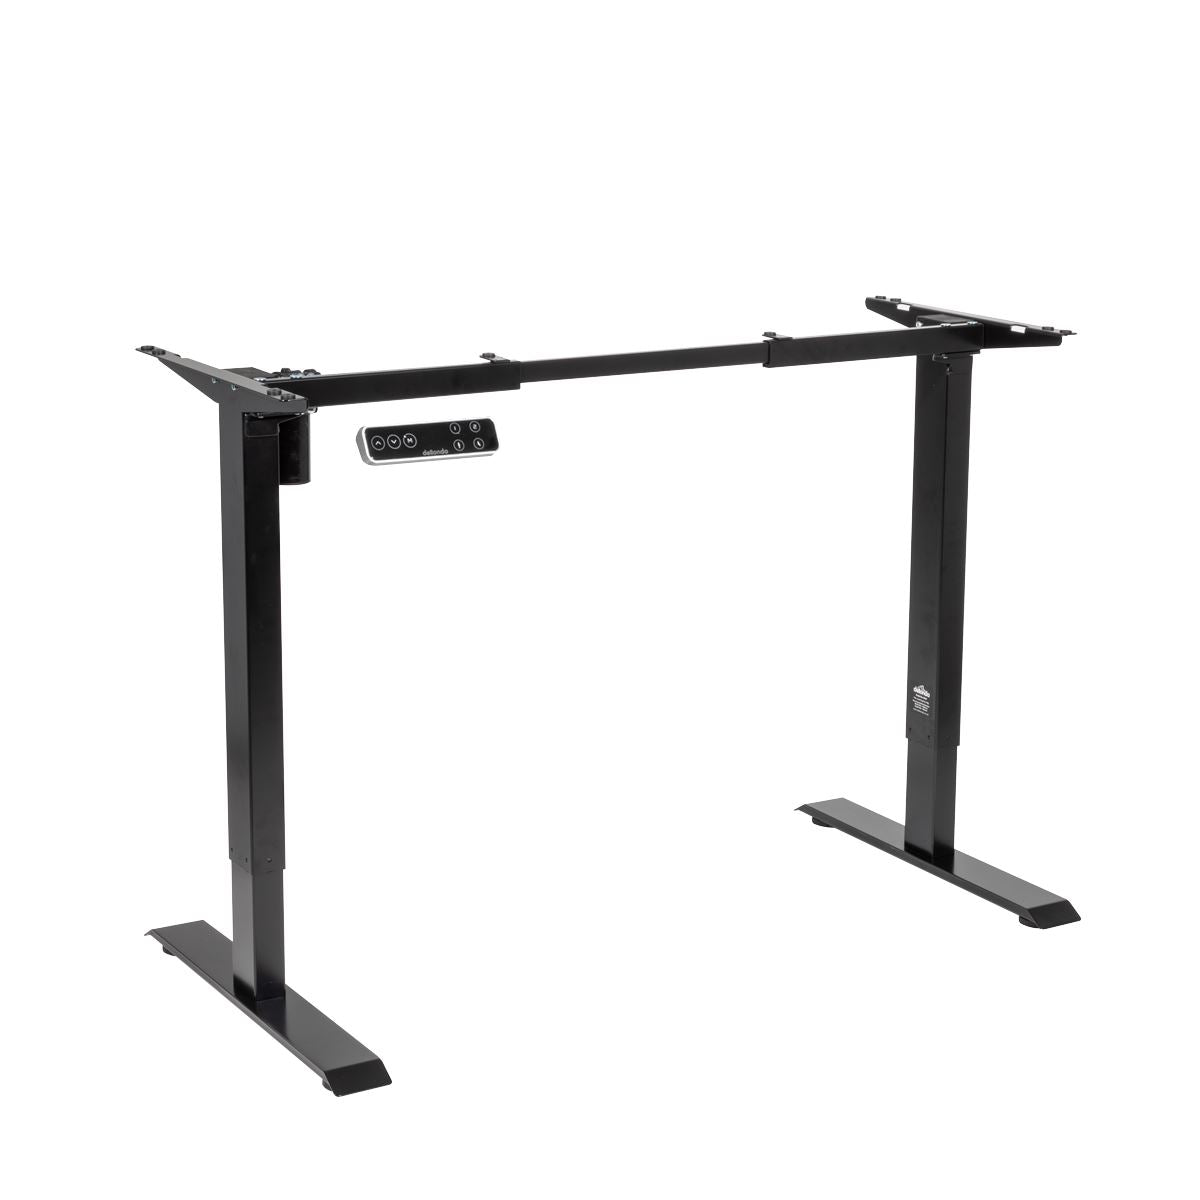 Dellonda Electric Adjustable Desk Frame, Digital Controls, 70kg Capacity, Black